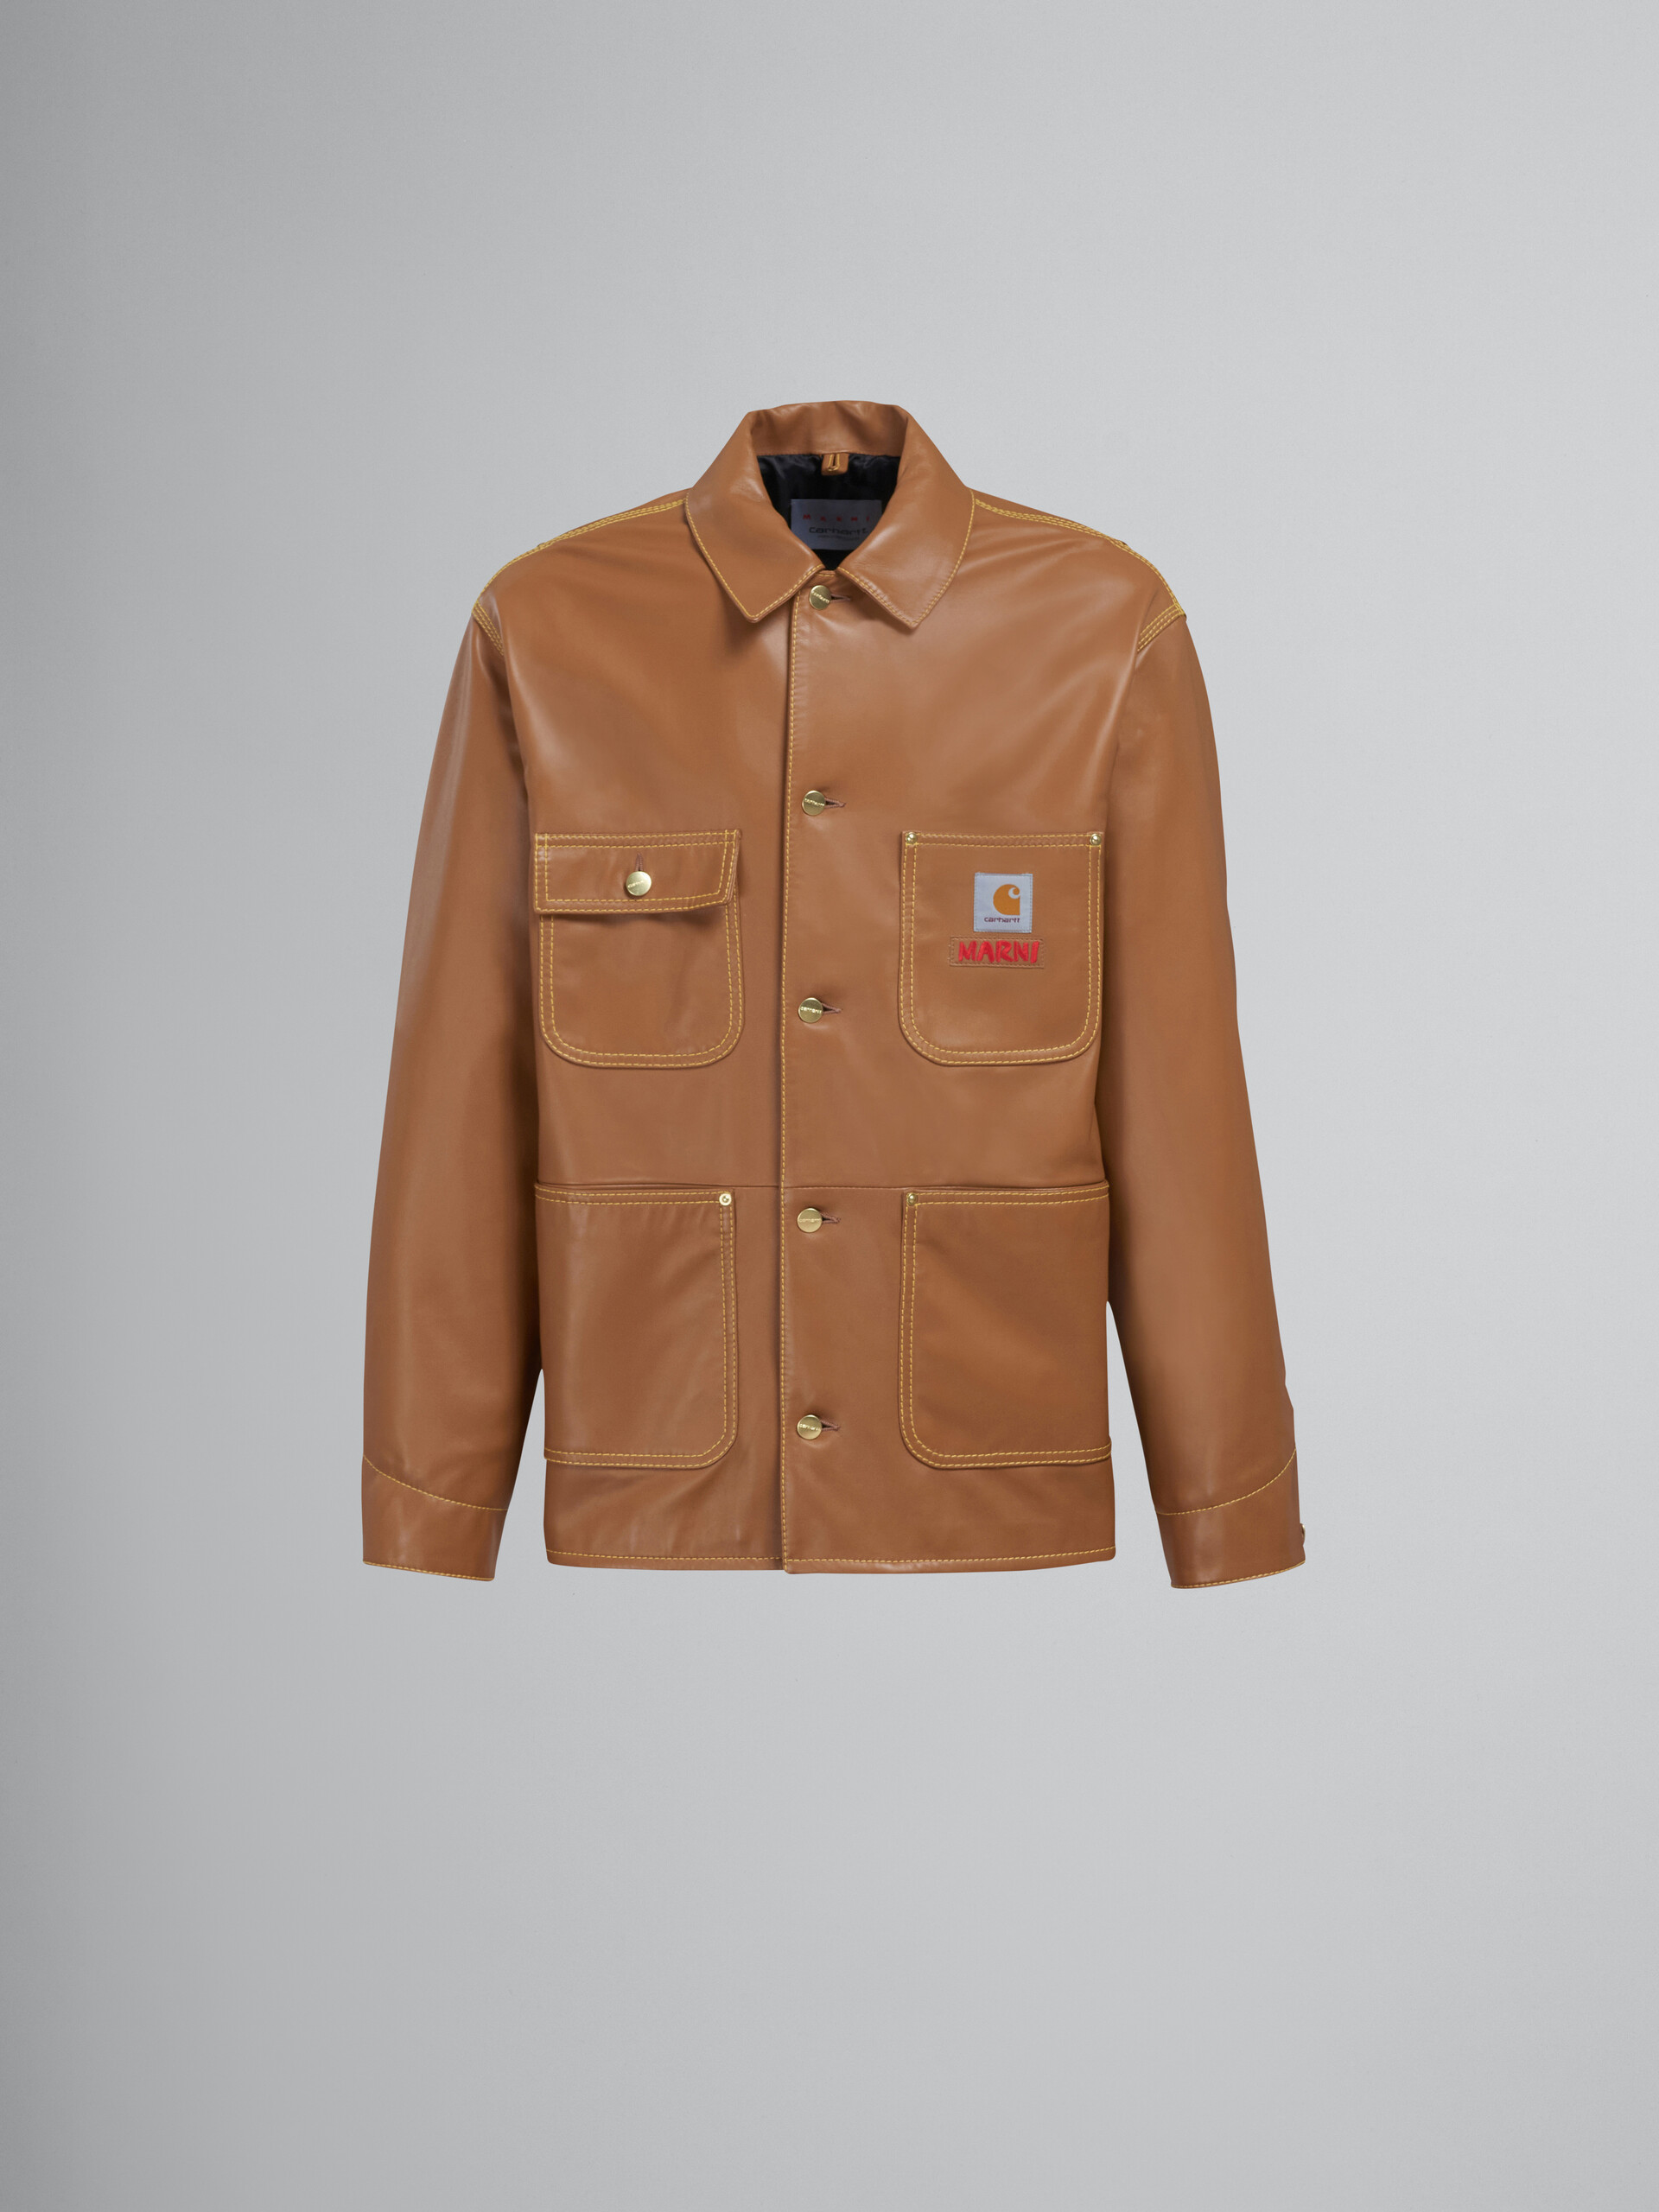 MARNI x CARHARTT WIP - brown leather jacket - Jackets - Image 1